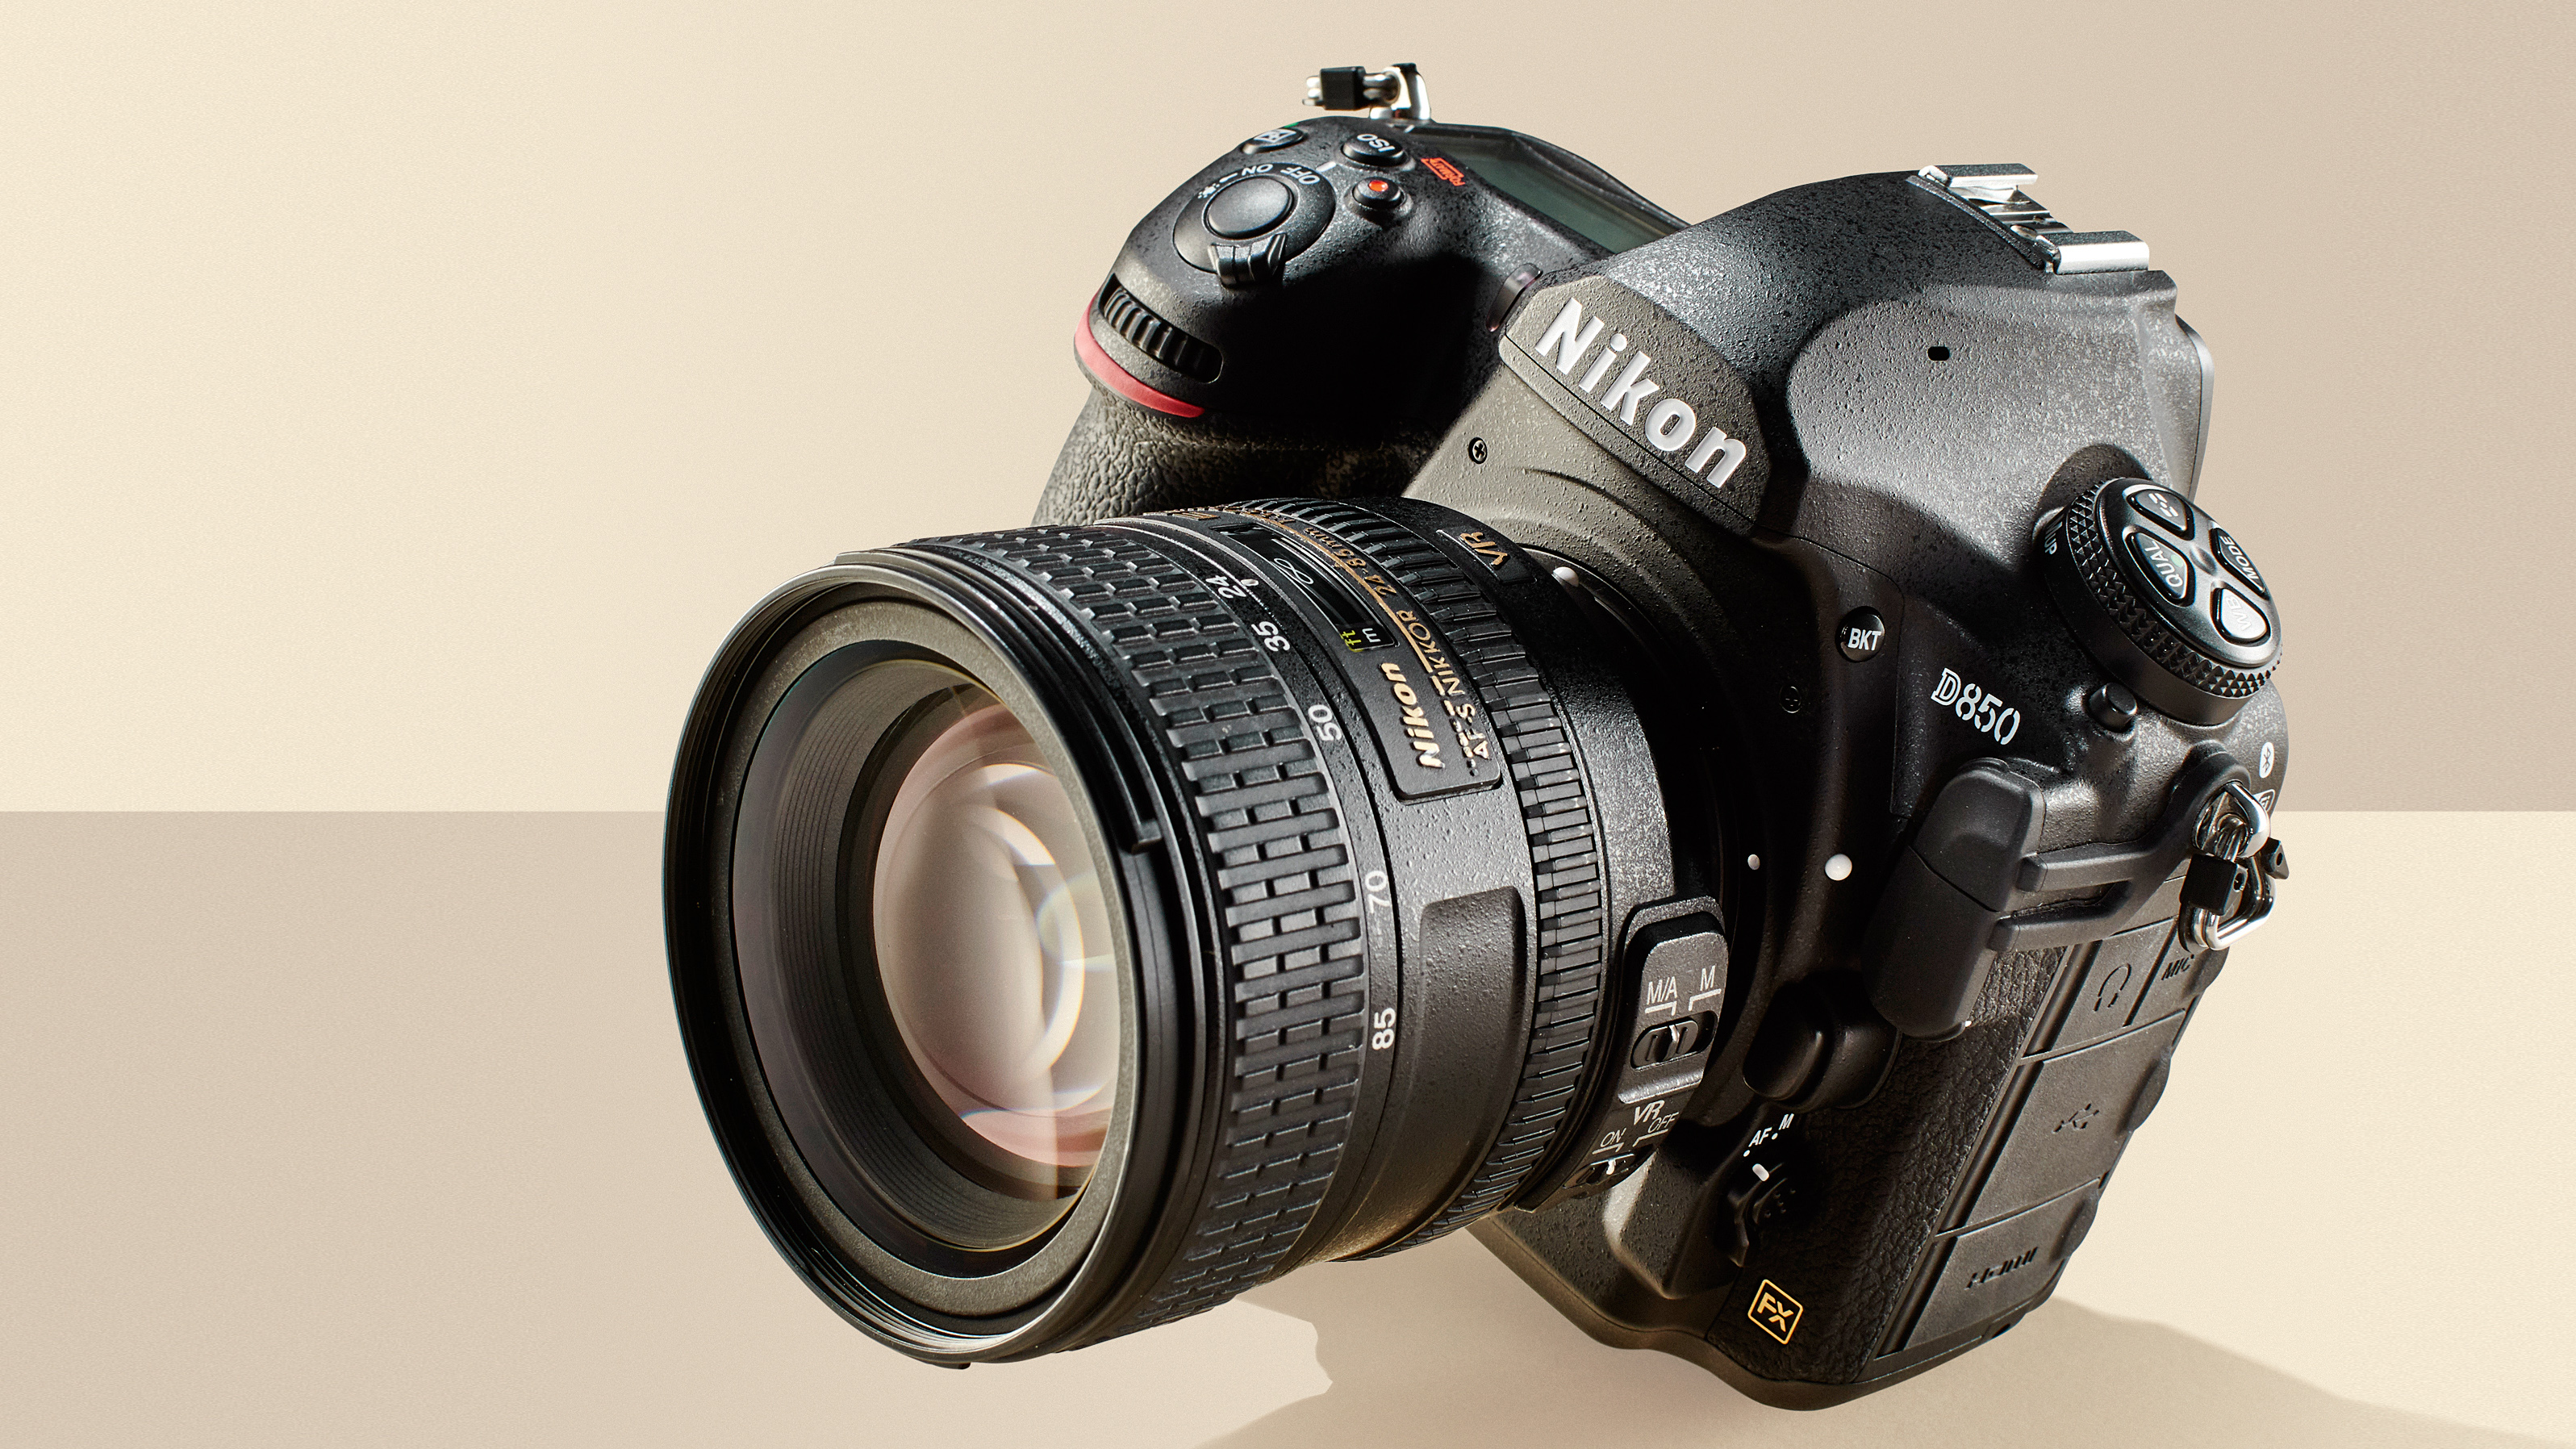 Best professional camera: Nikon D850